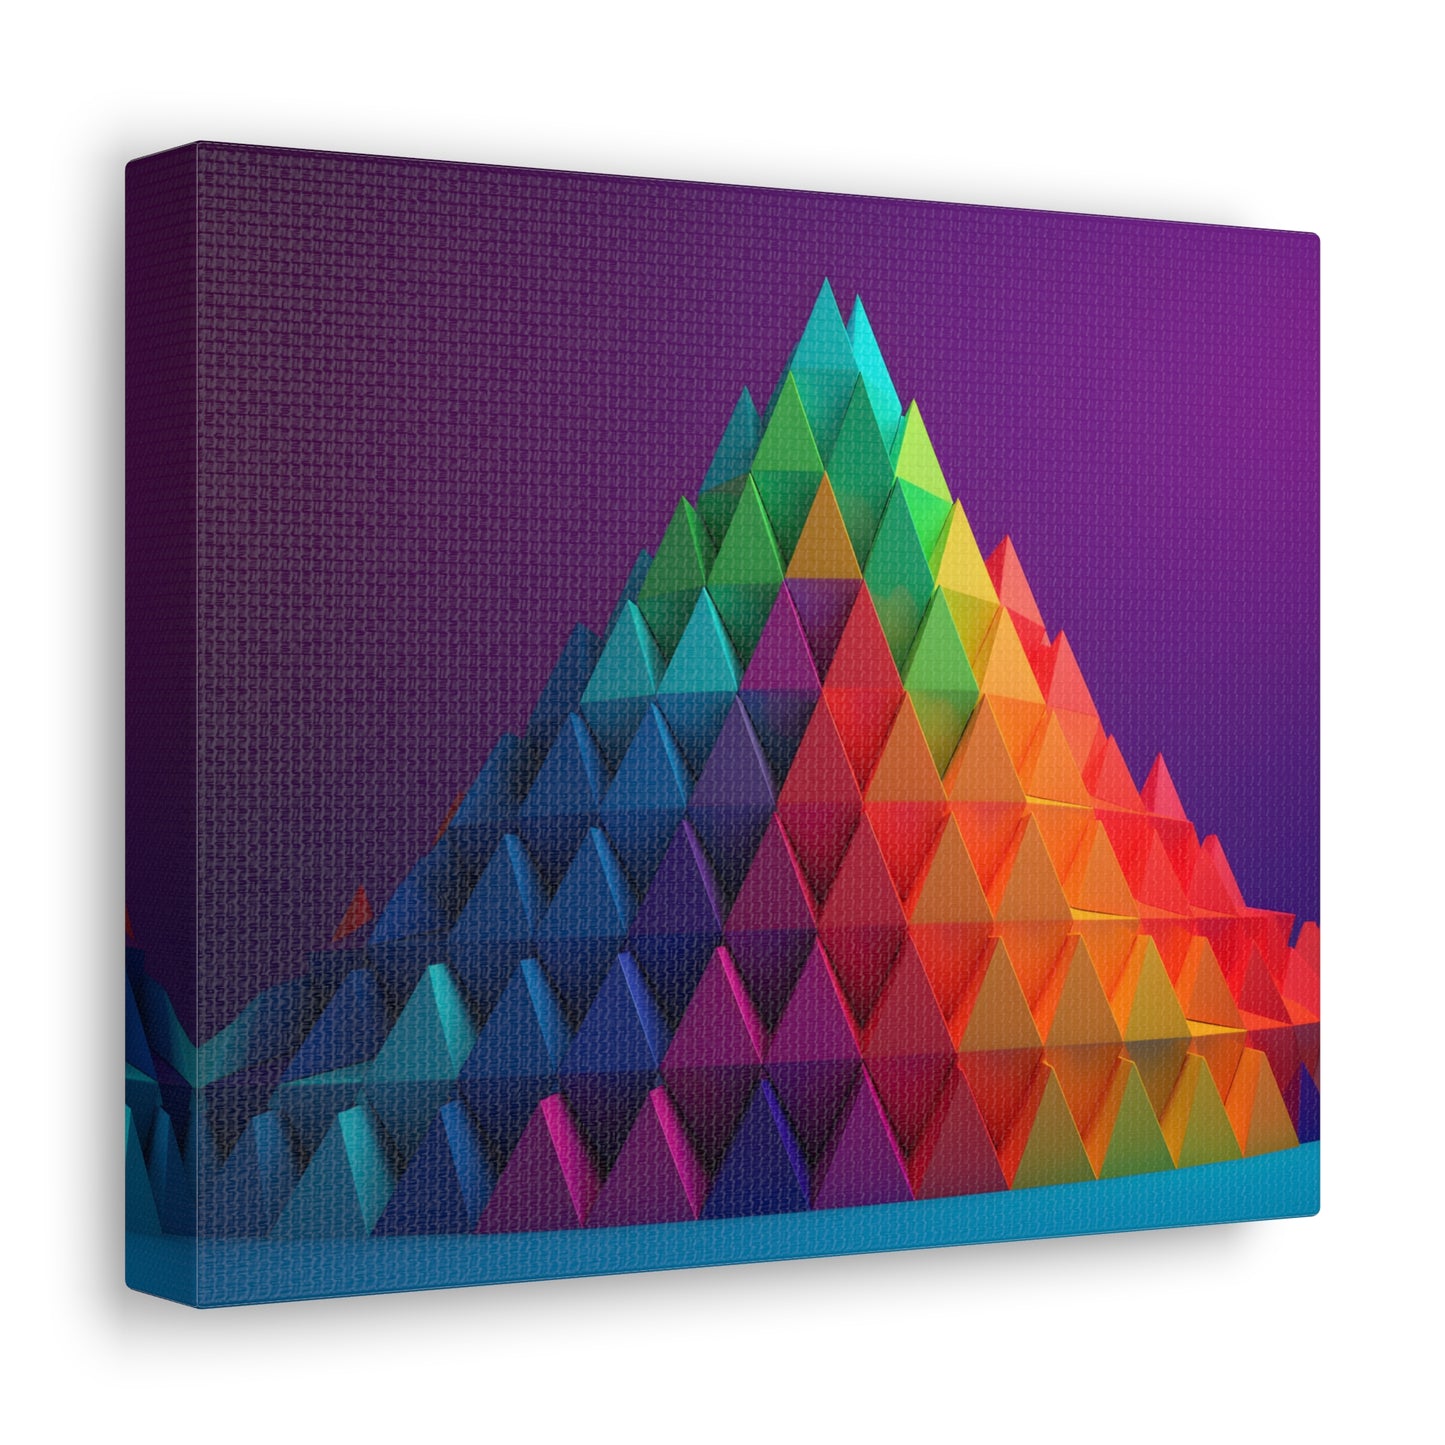 3D Triangle Pyramid